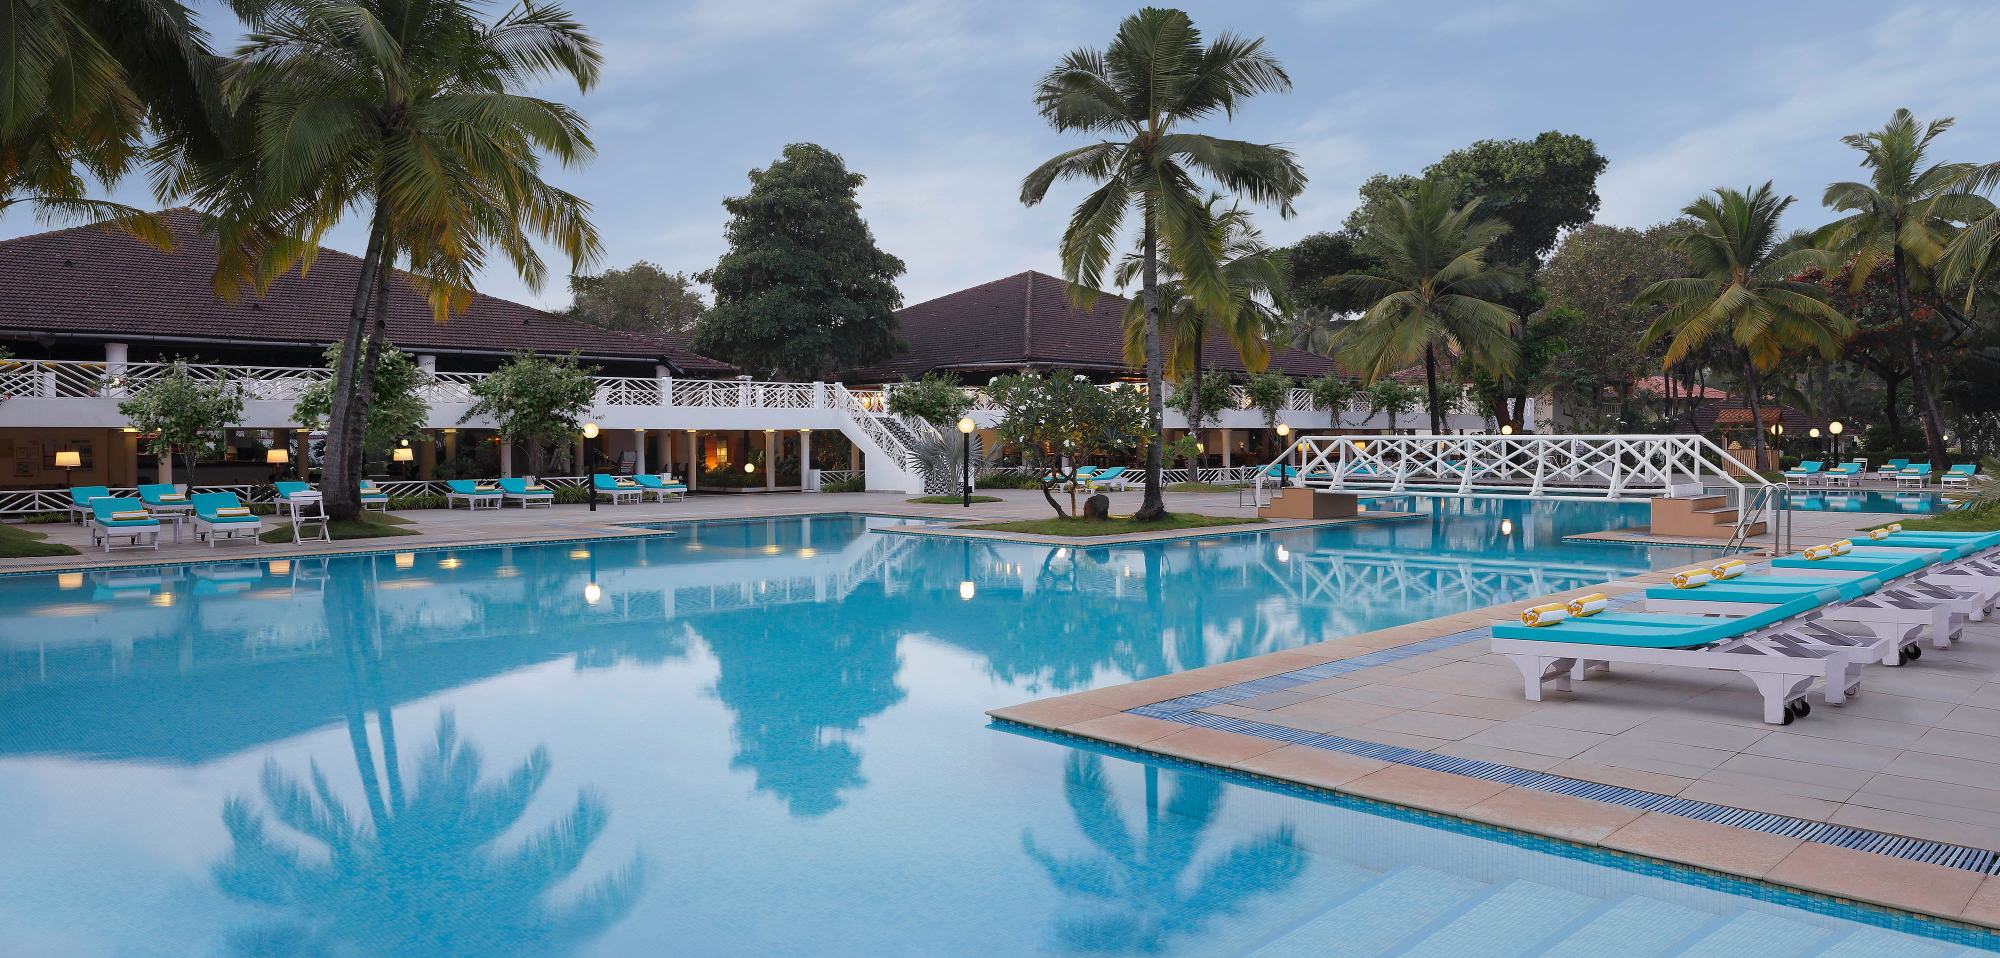 Swimming pool at Novotel Goa Dona Sylvia Resort. Click to enlarge.